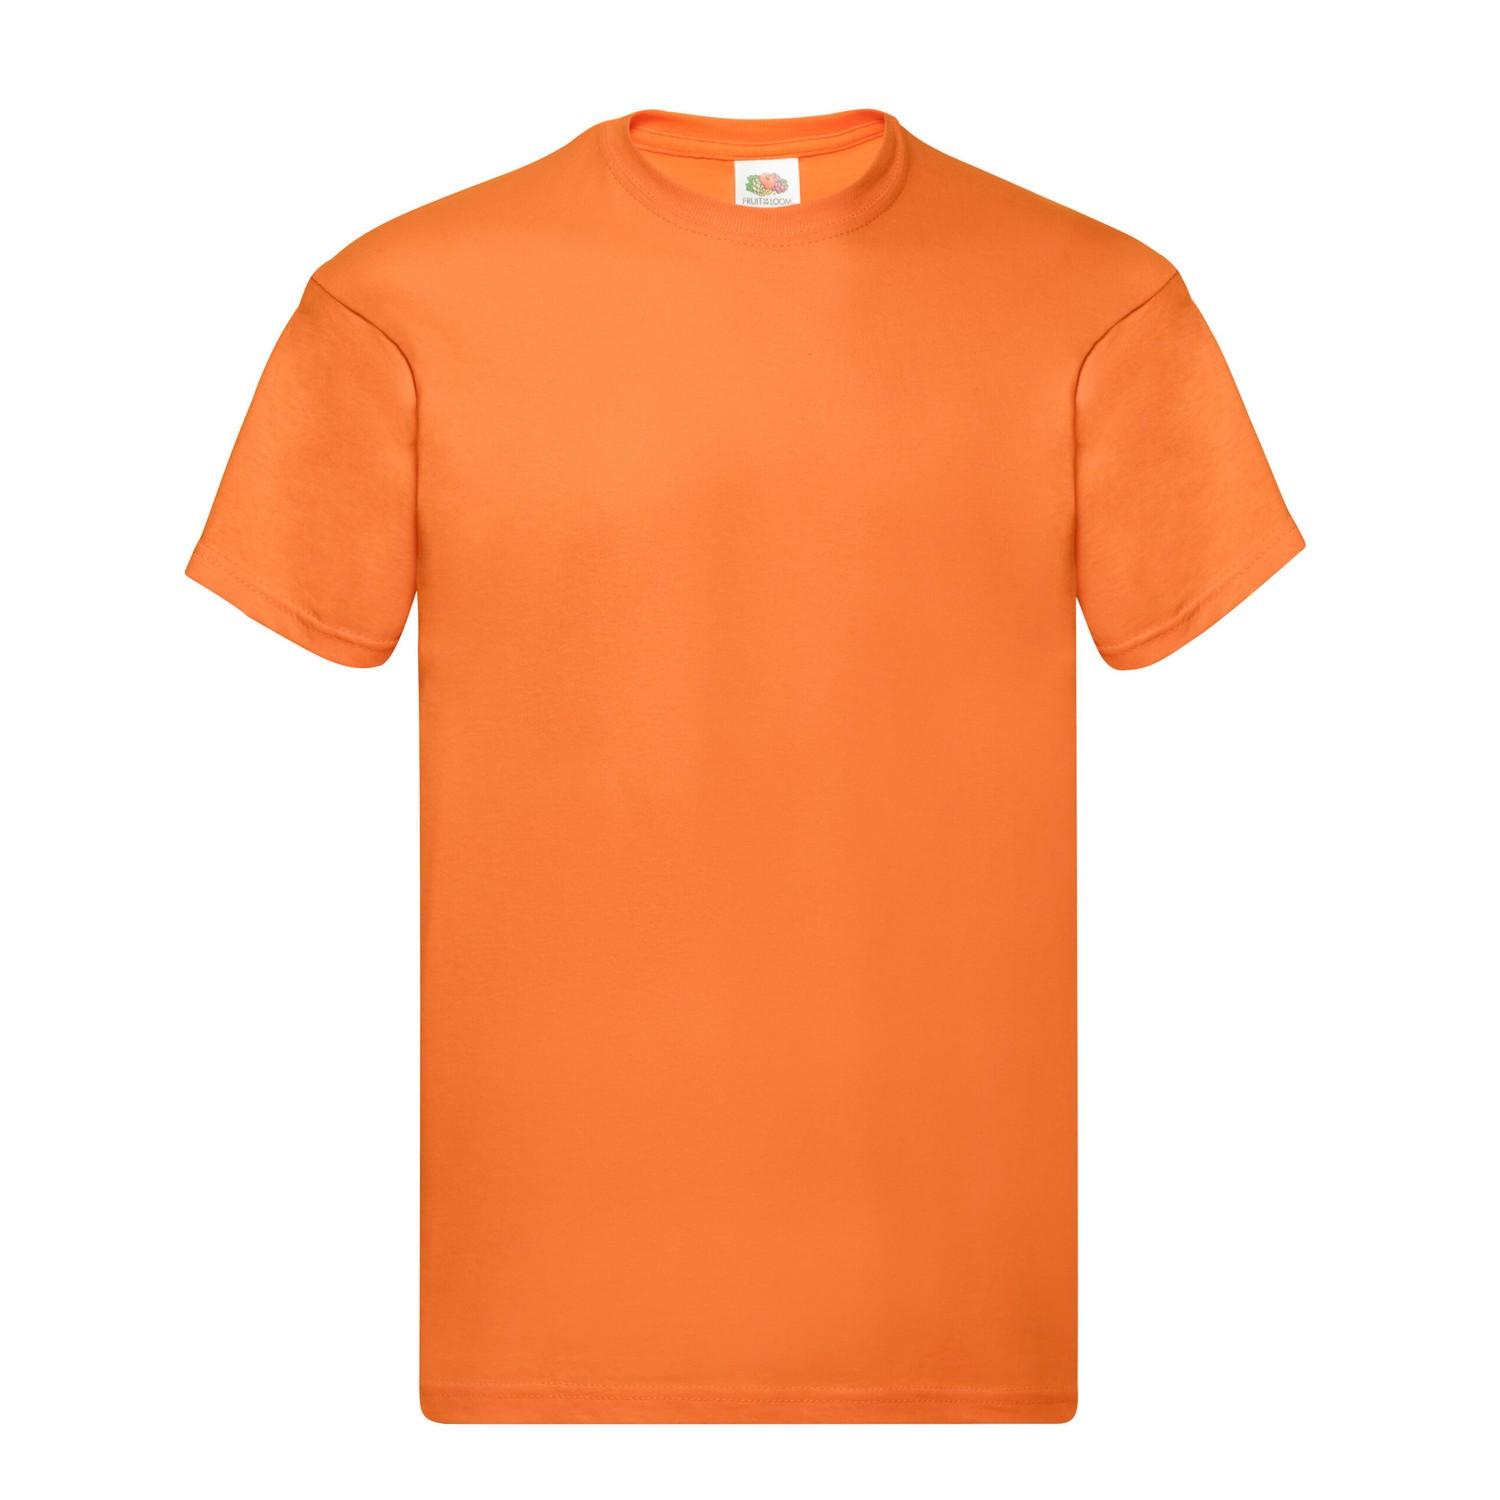 Original Tshirt Herren Orange S von Fruit of the Loom